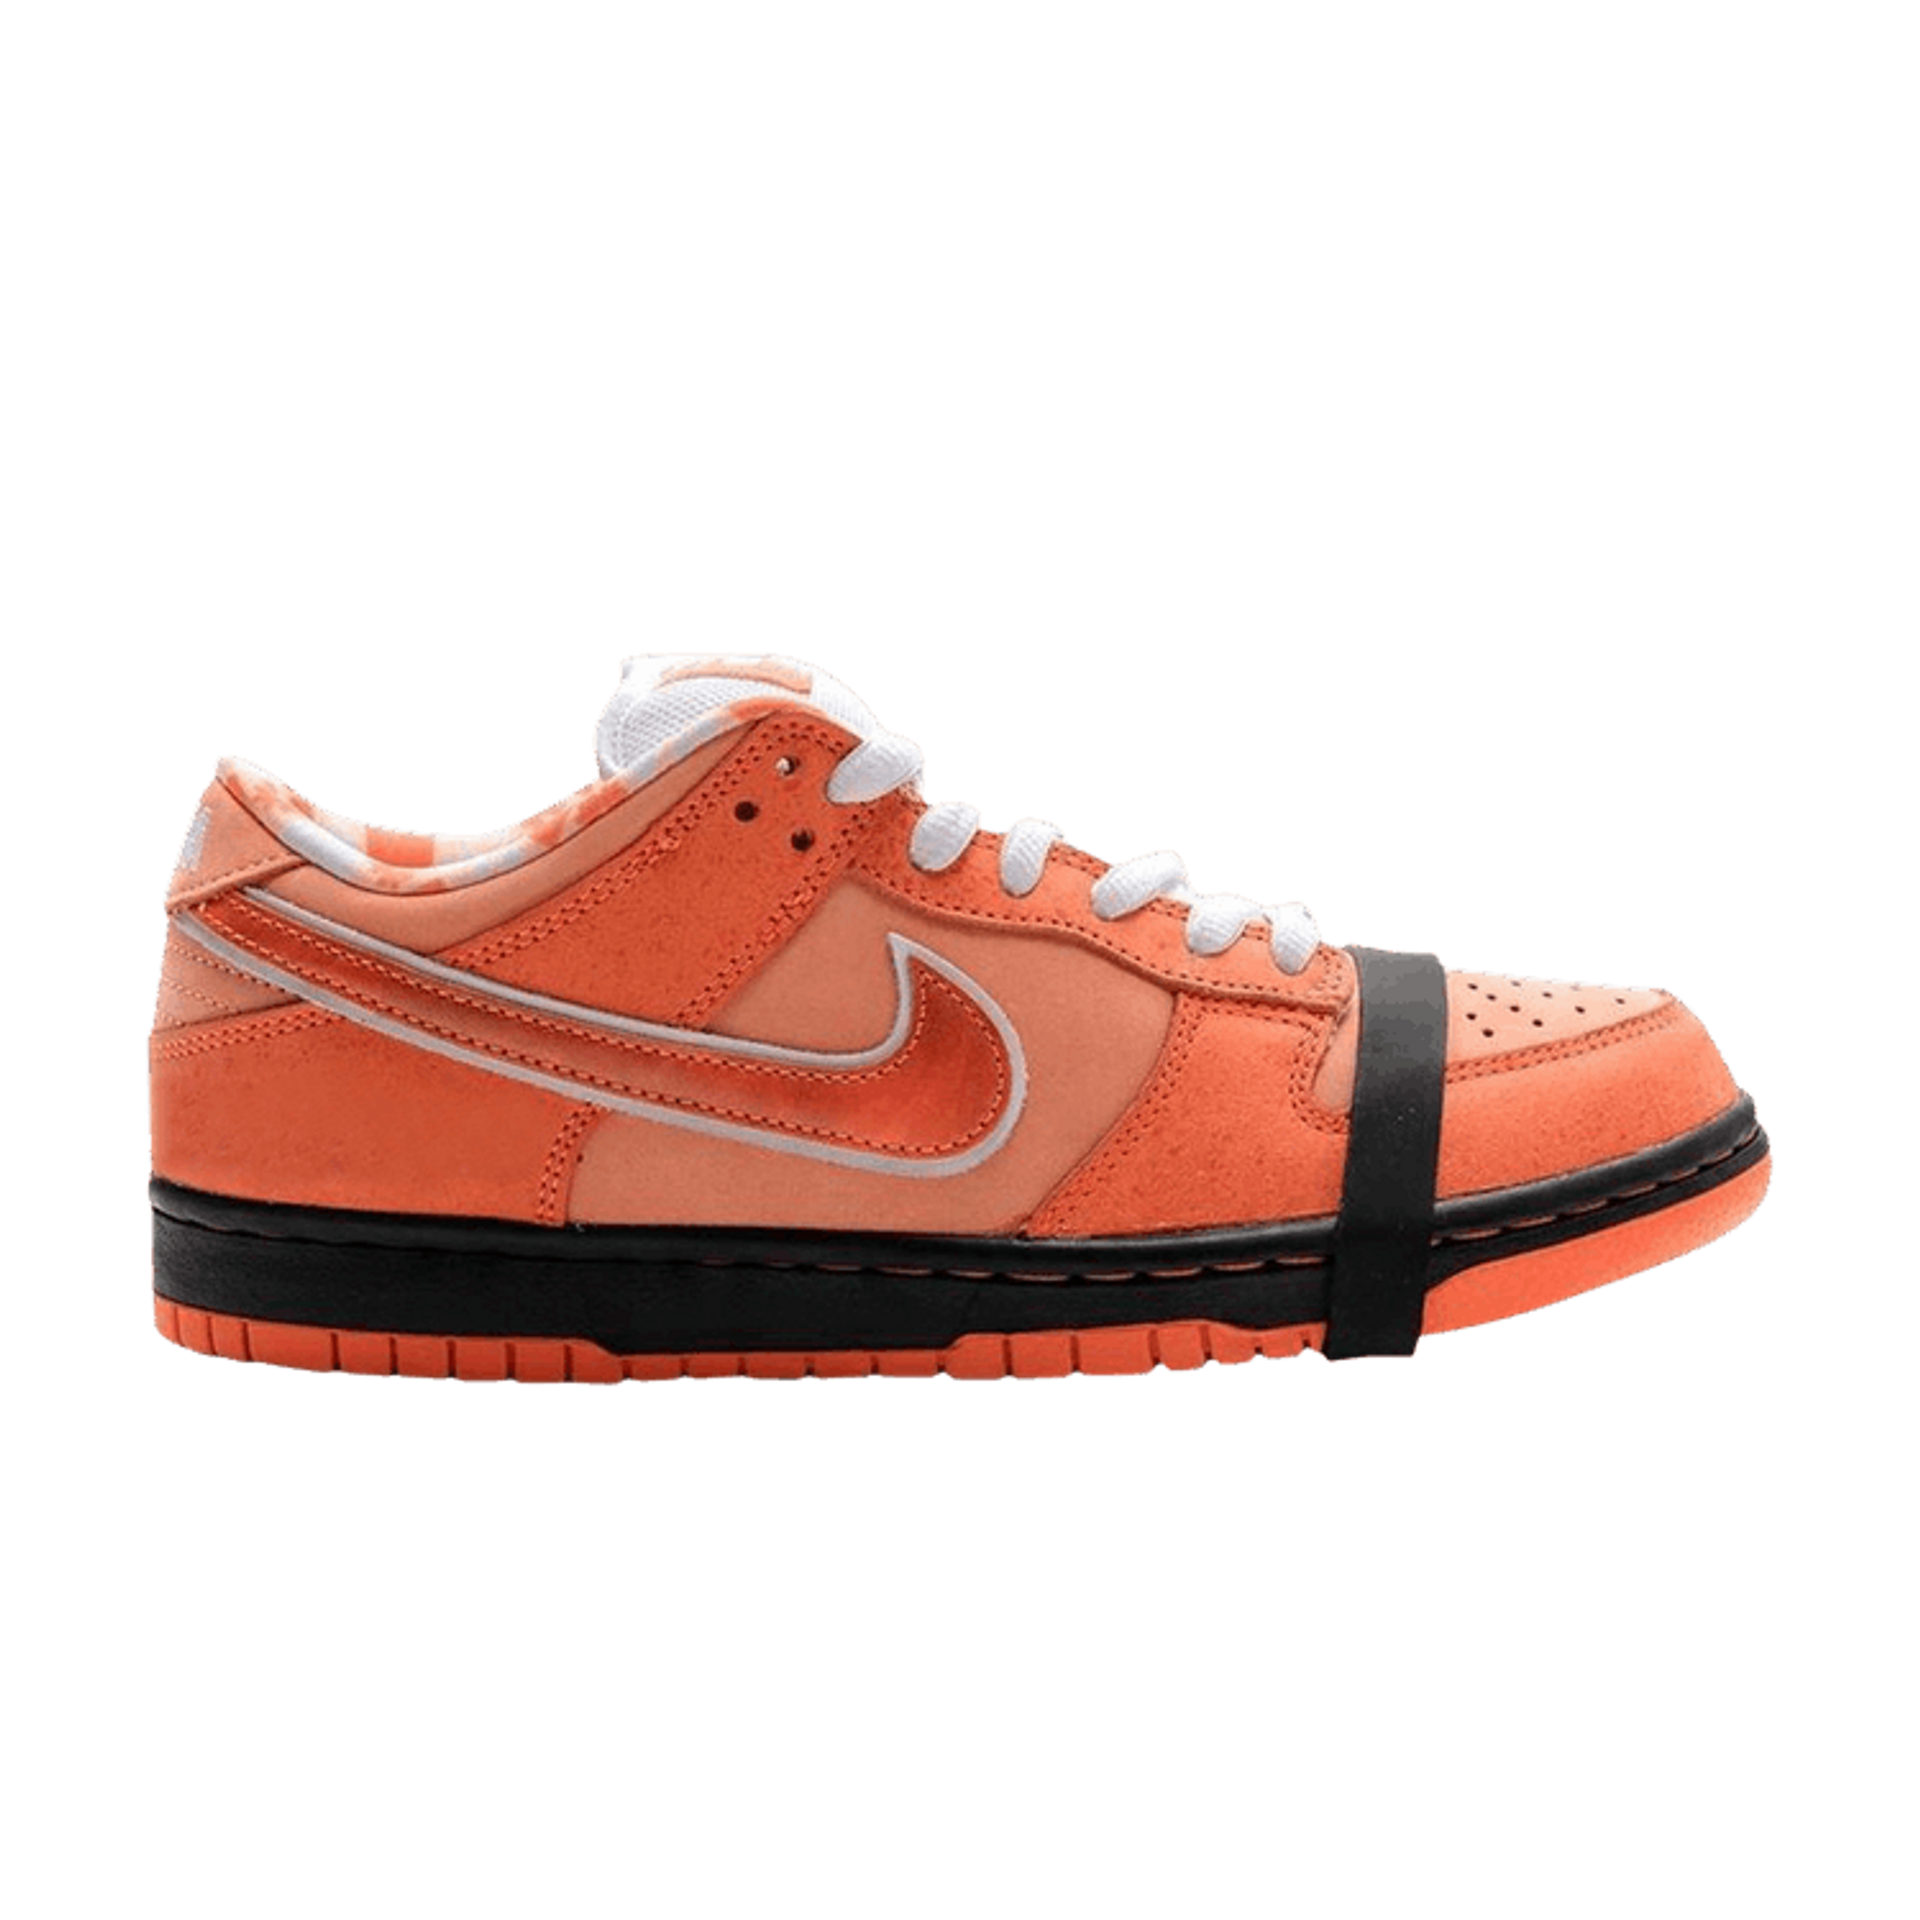 Concepts x Nike Dunk Low SB 'Orange Lobster'